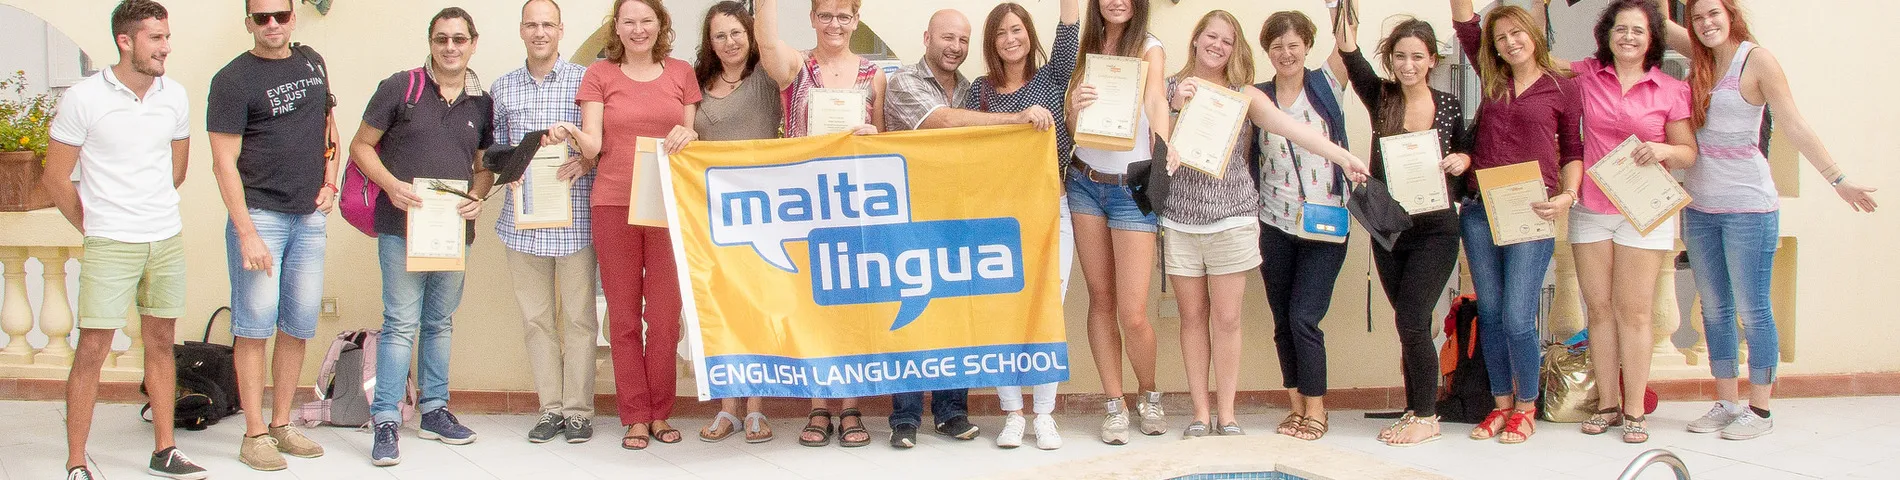 Maltalingua School of English kép 1